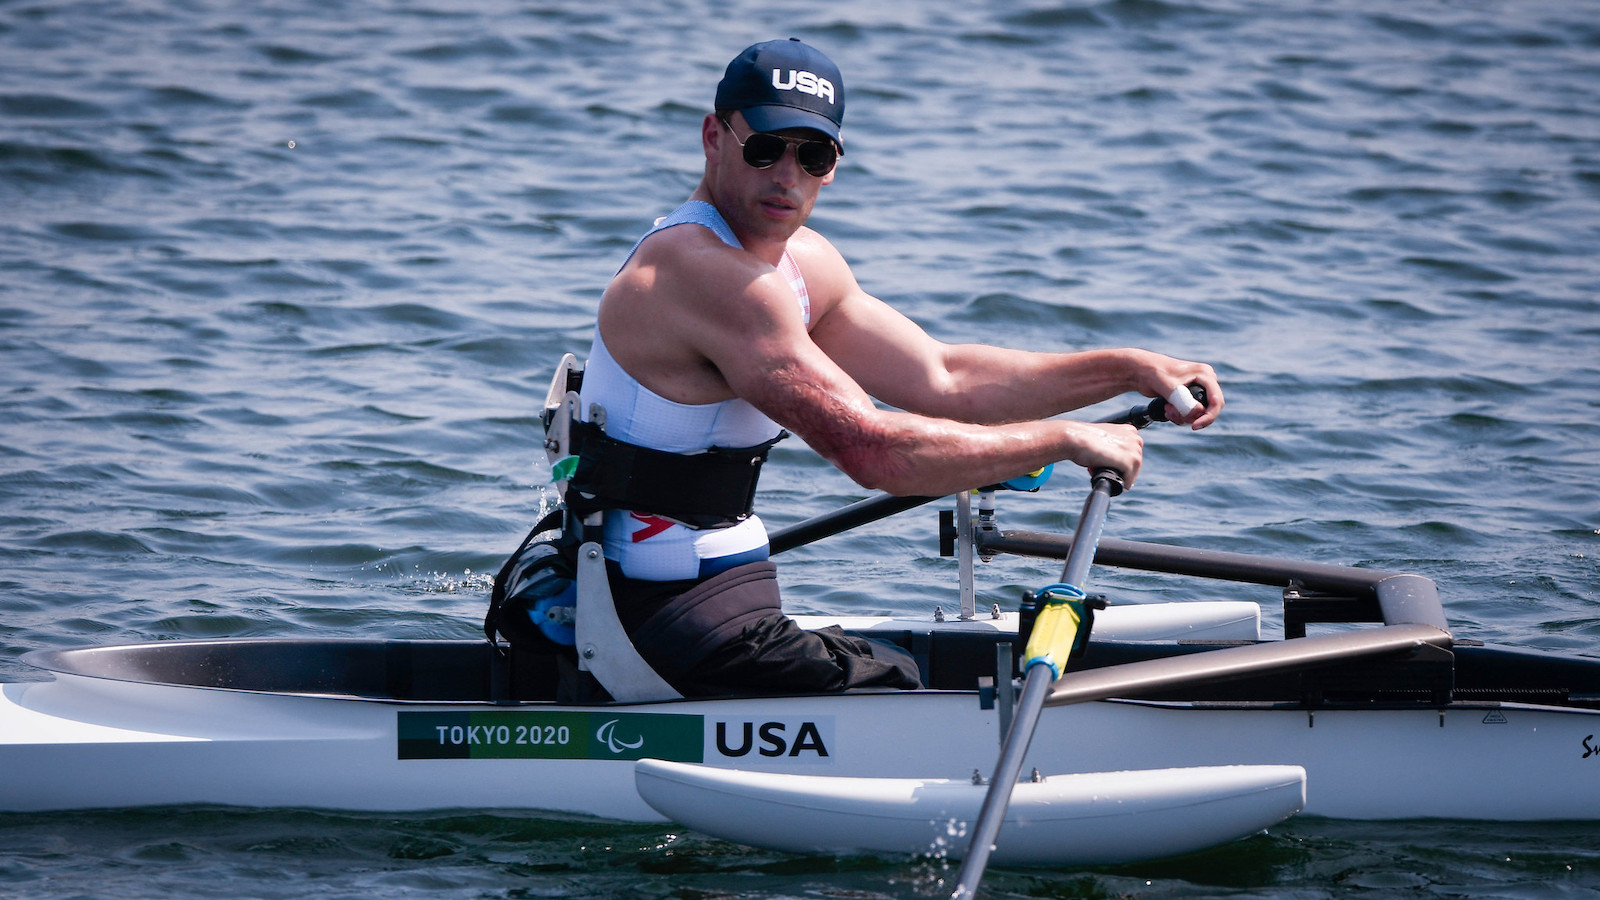 Adaptive Rowing